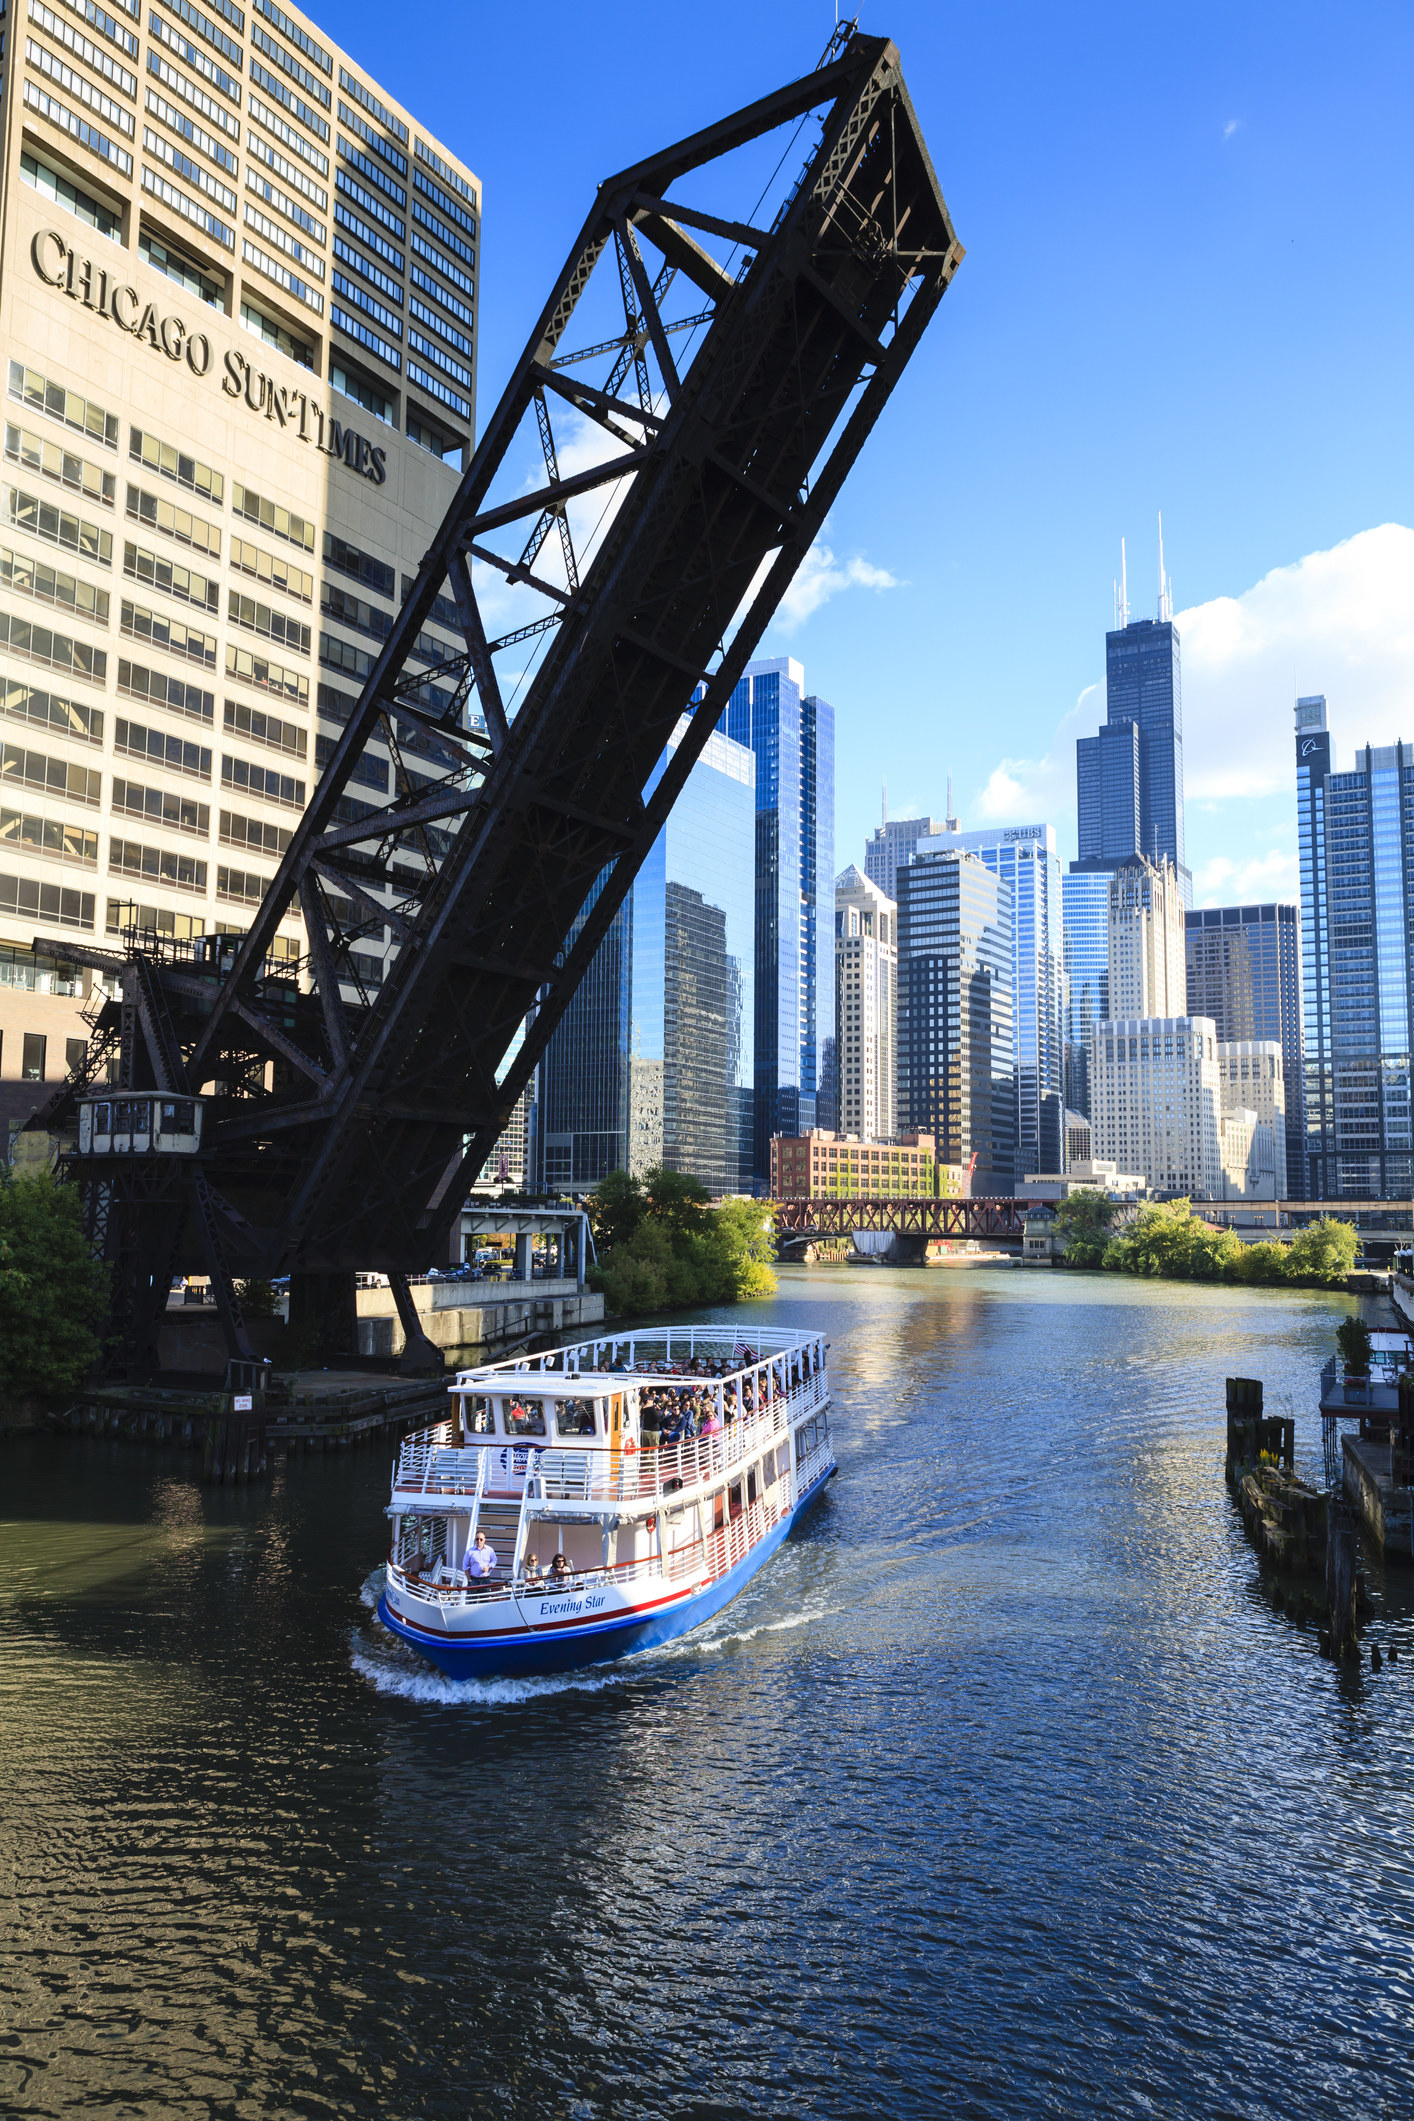 Architecture boat tour in Chicago